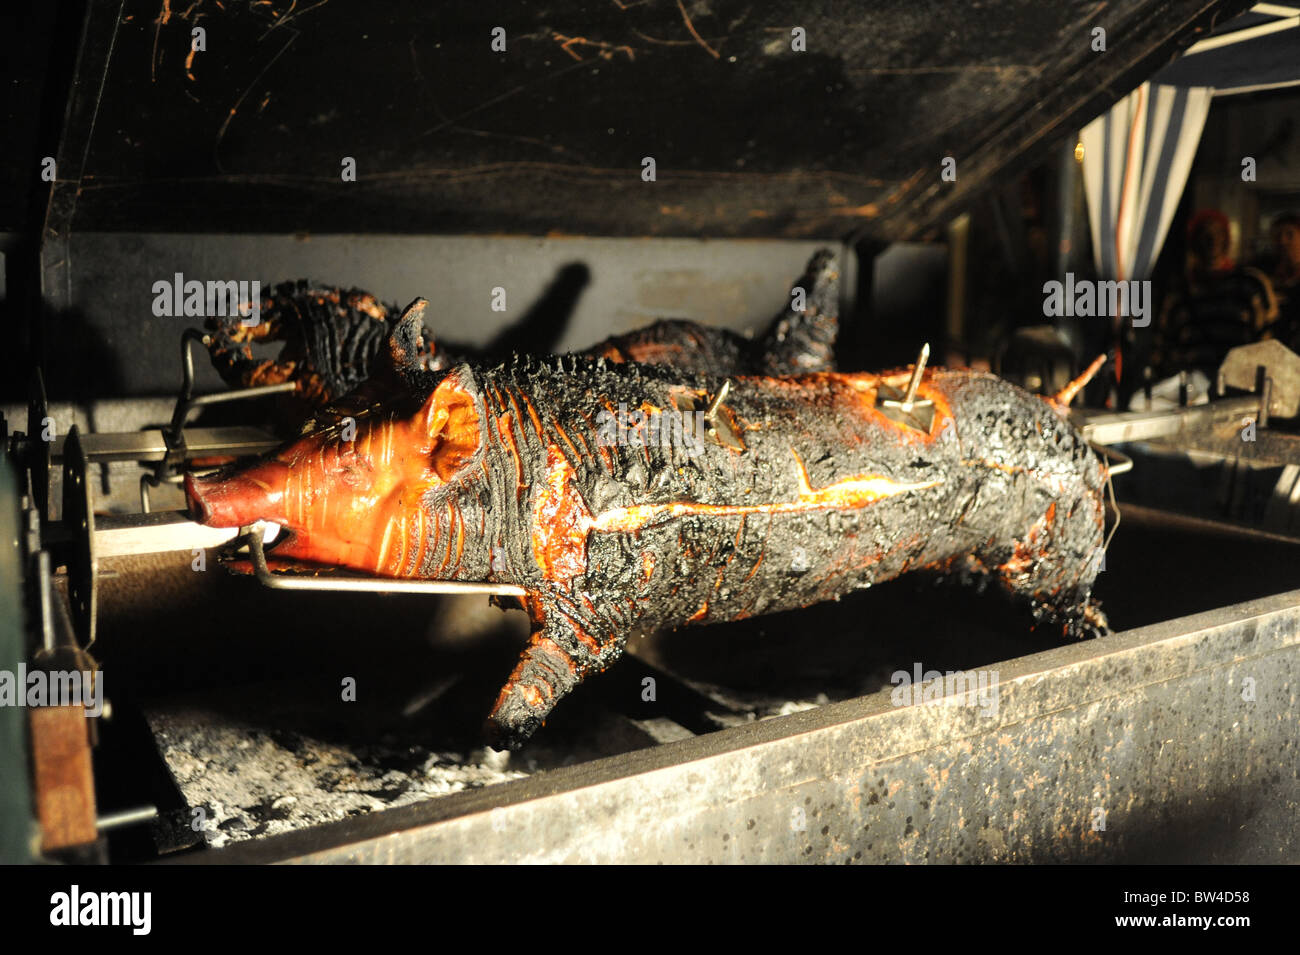 Hog roast on a spit Stock Photo